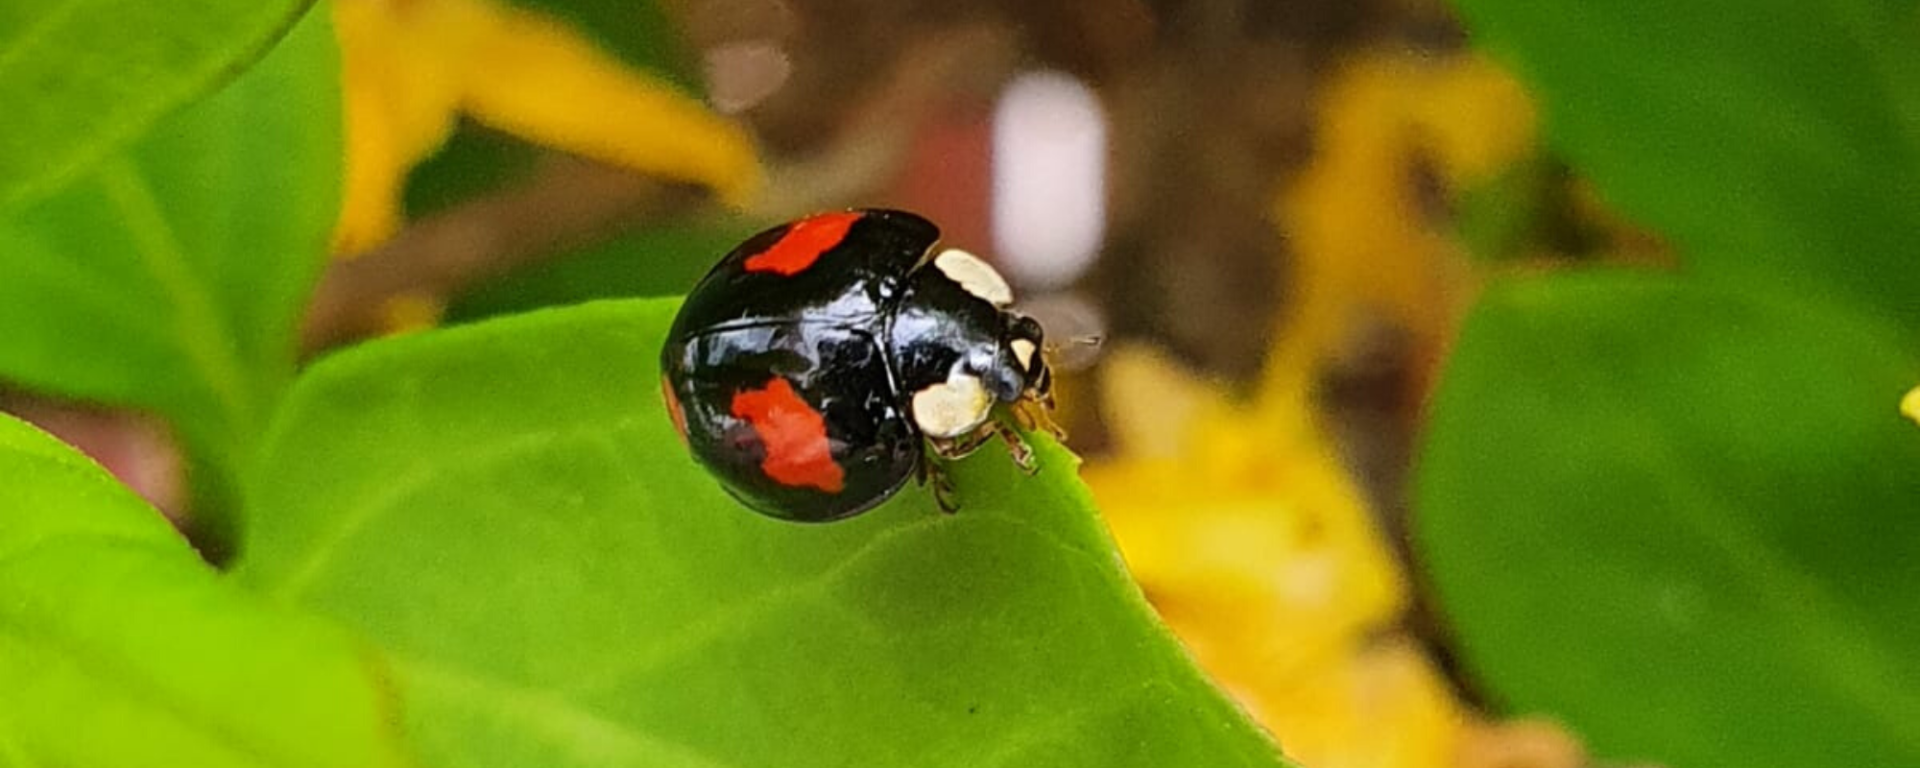 Image of a ladybird